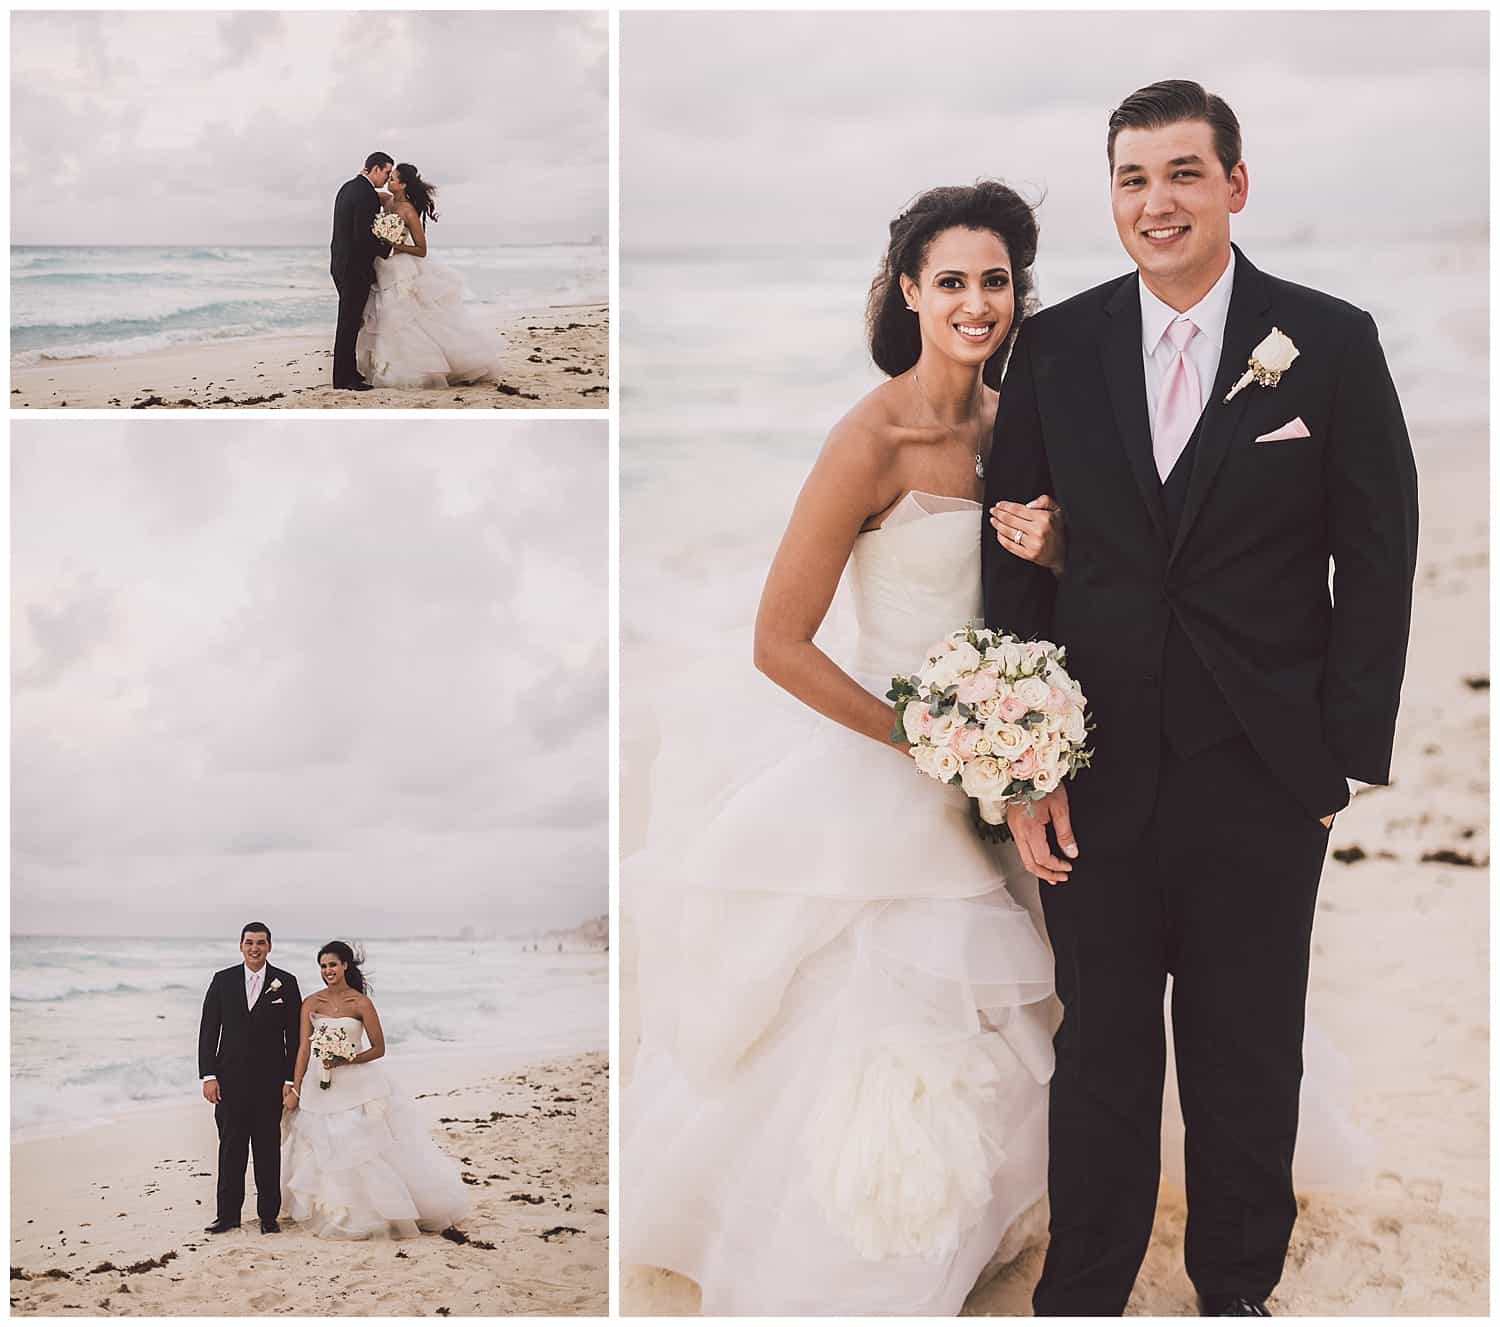 Secrets the Vine Cancun wedding photos by Cancun wedding photographer Luma Weddings